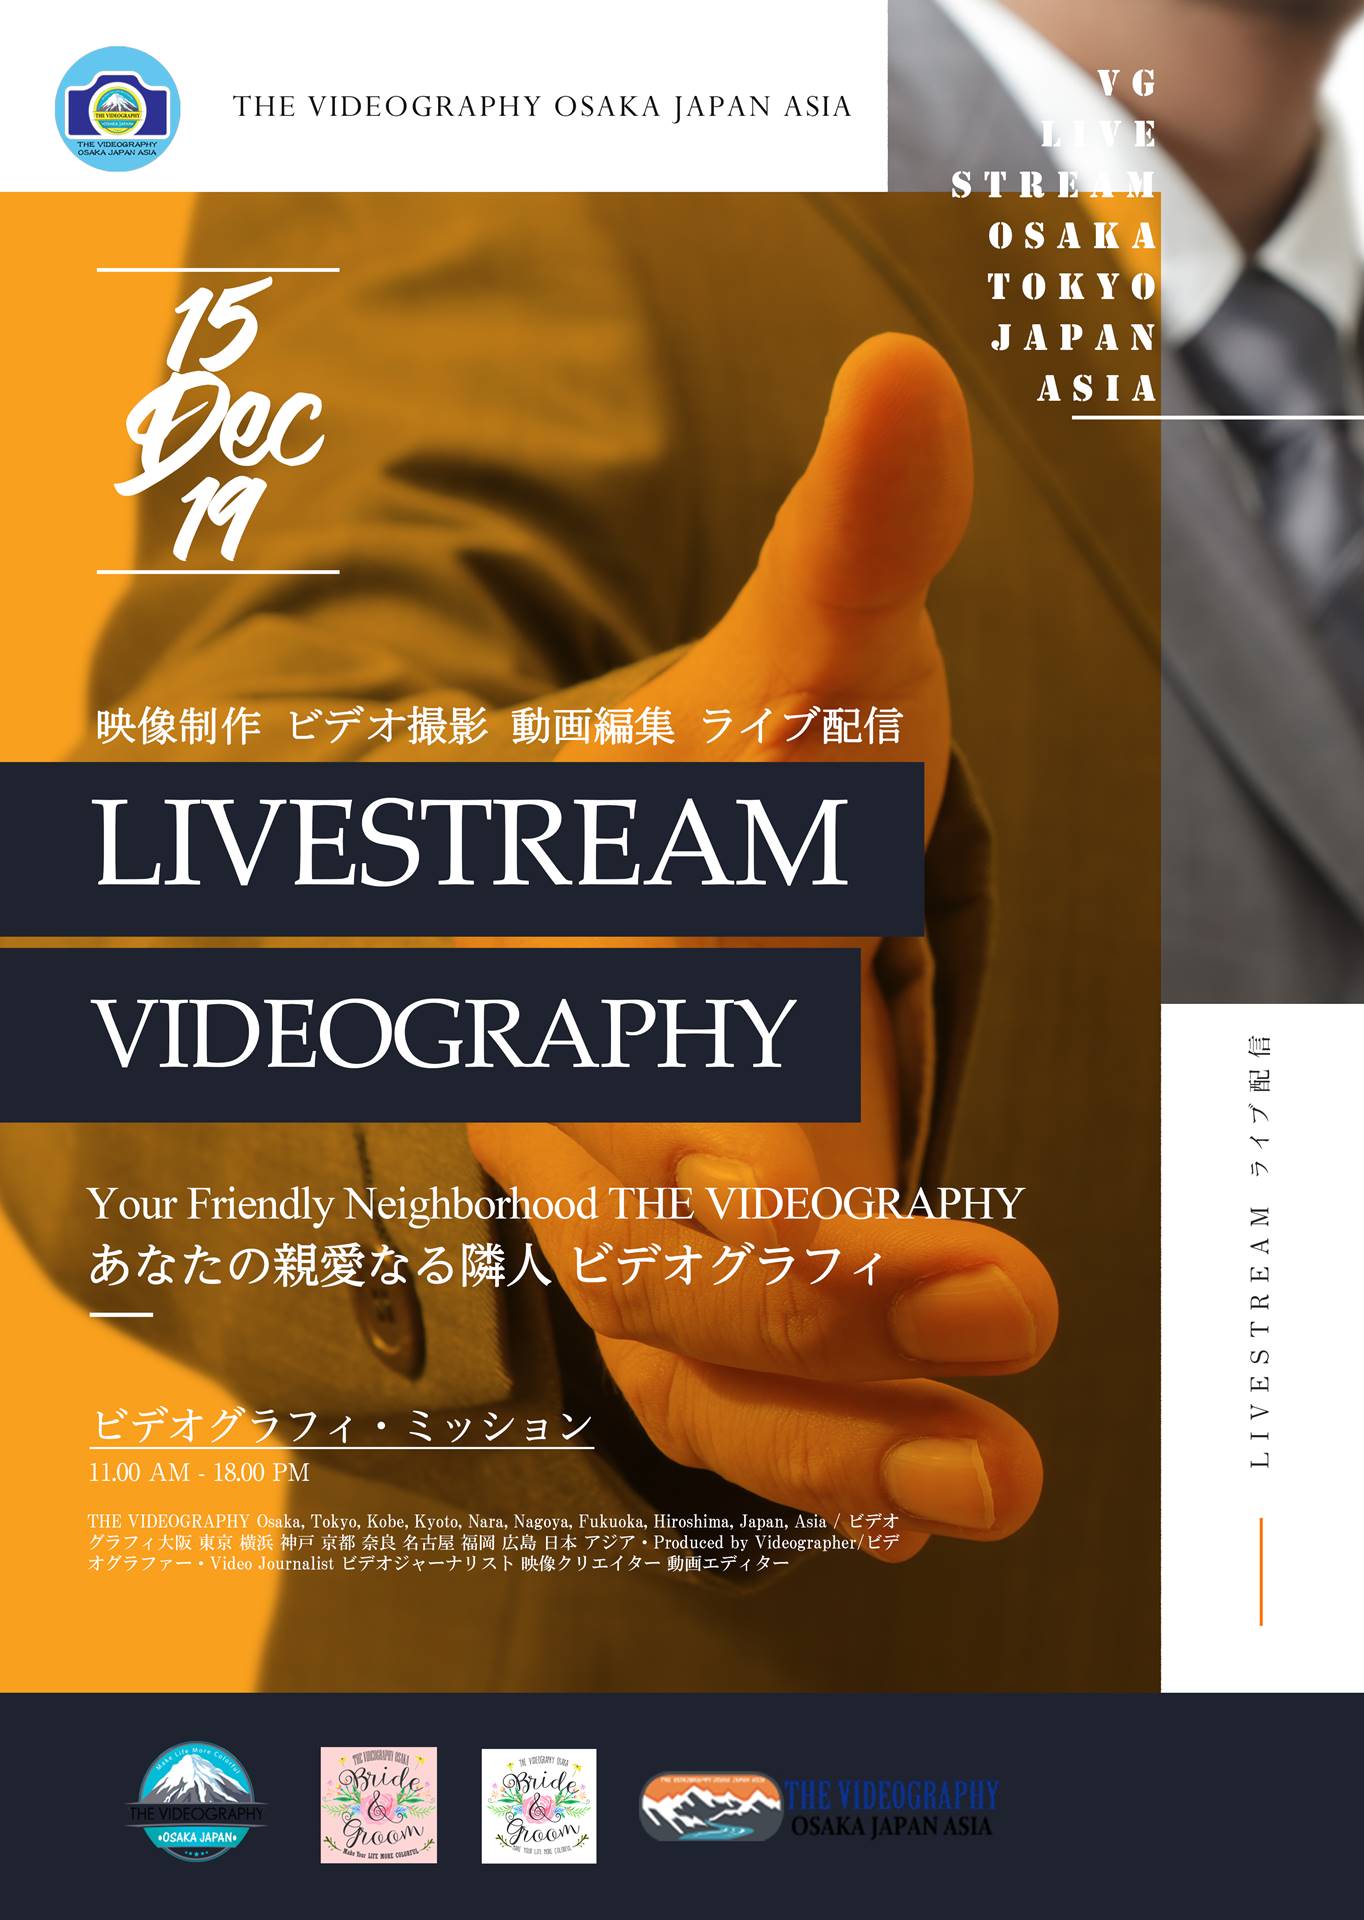 WOL・Webinar on Livestream